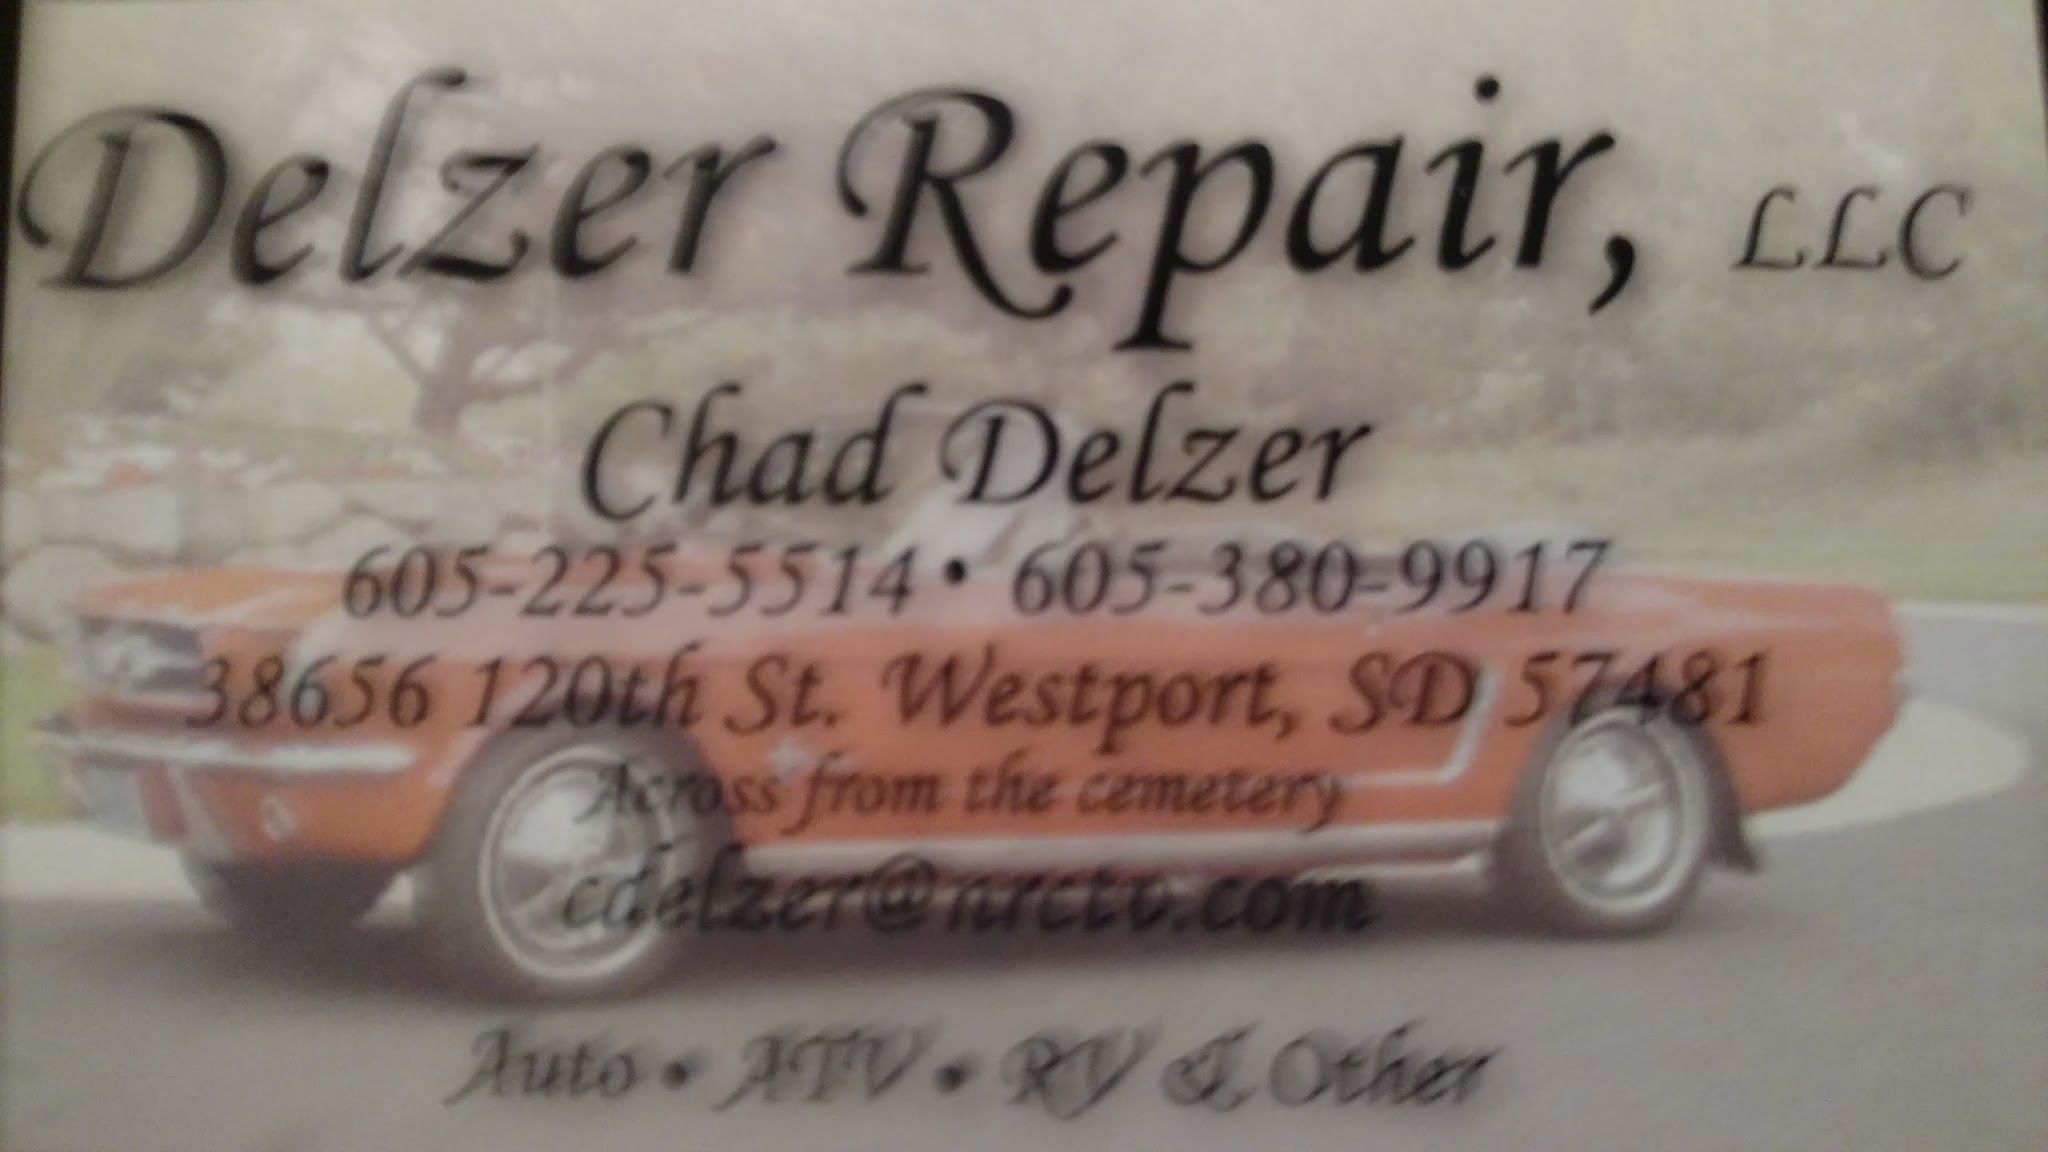 Delzer Repair